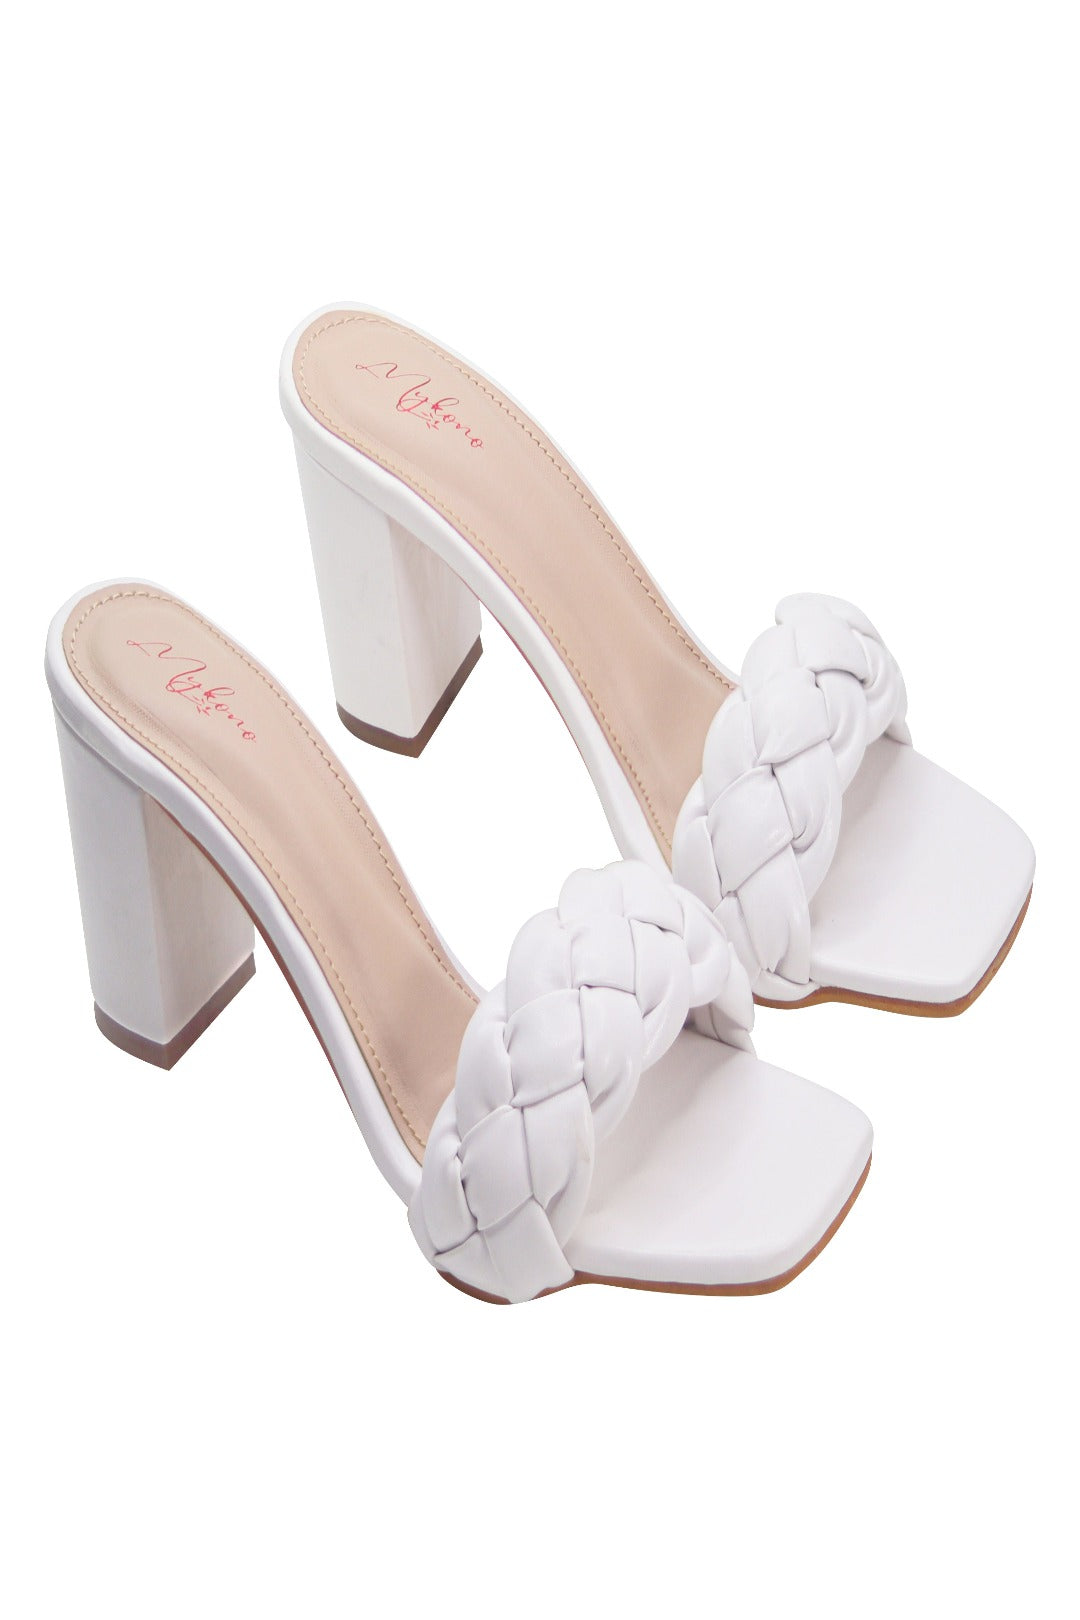 Buy White Chunky Heel online | Lazada.com.ph